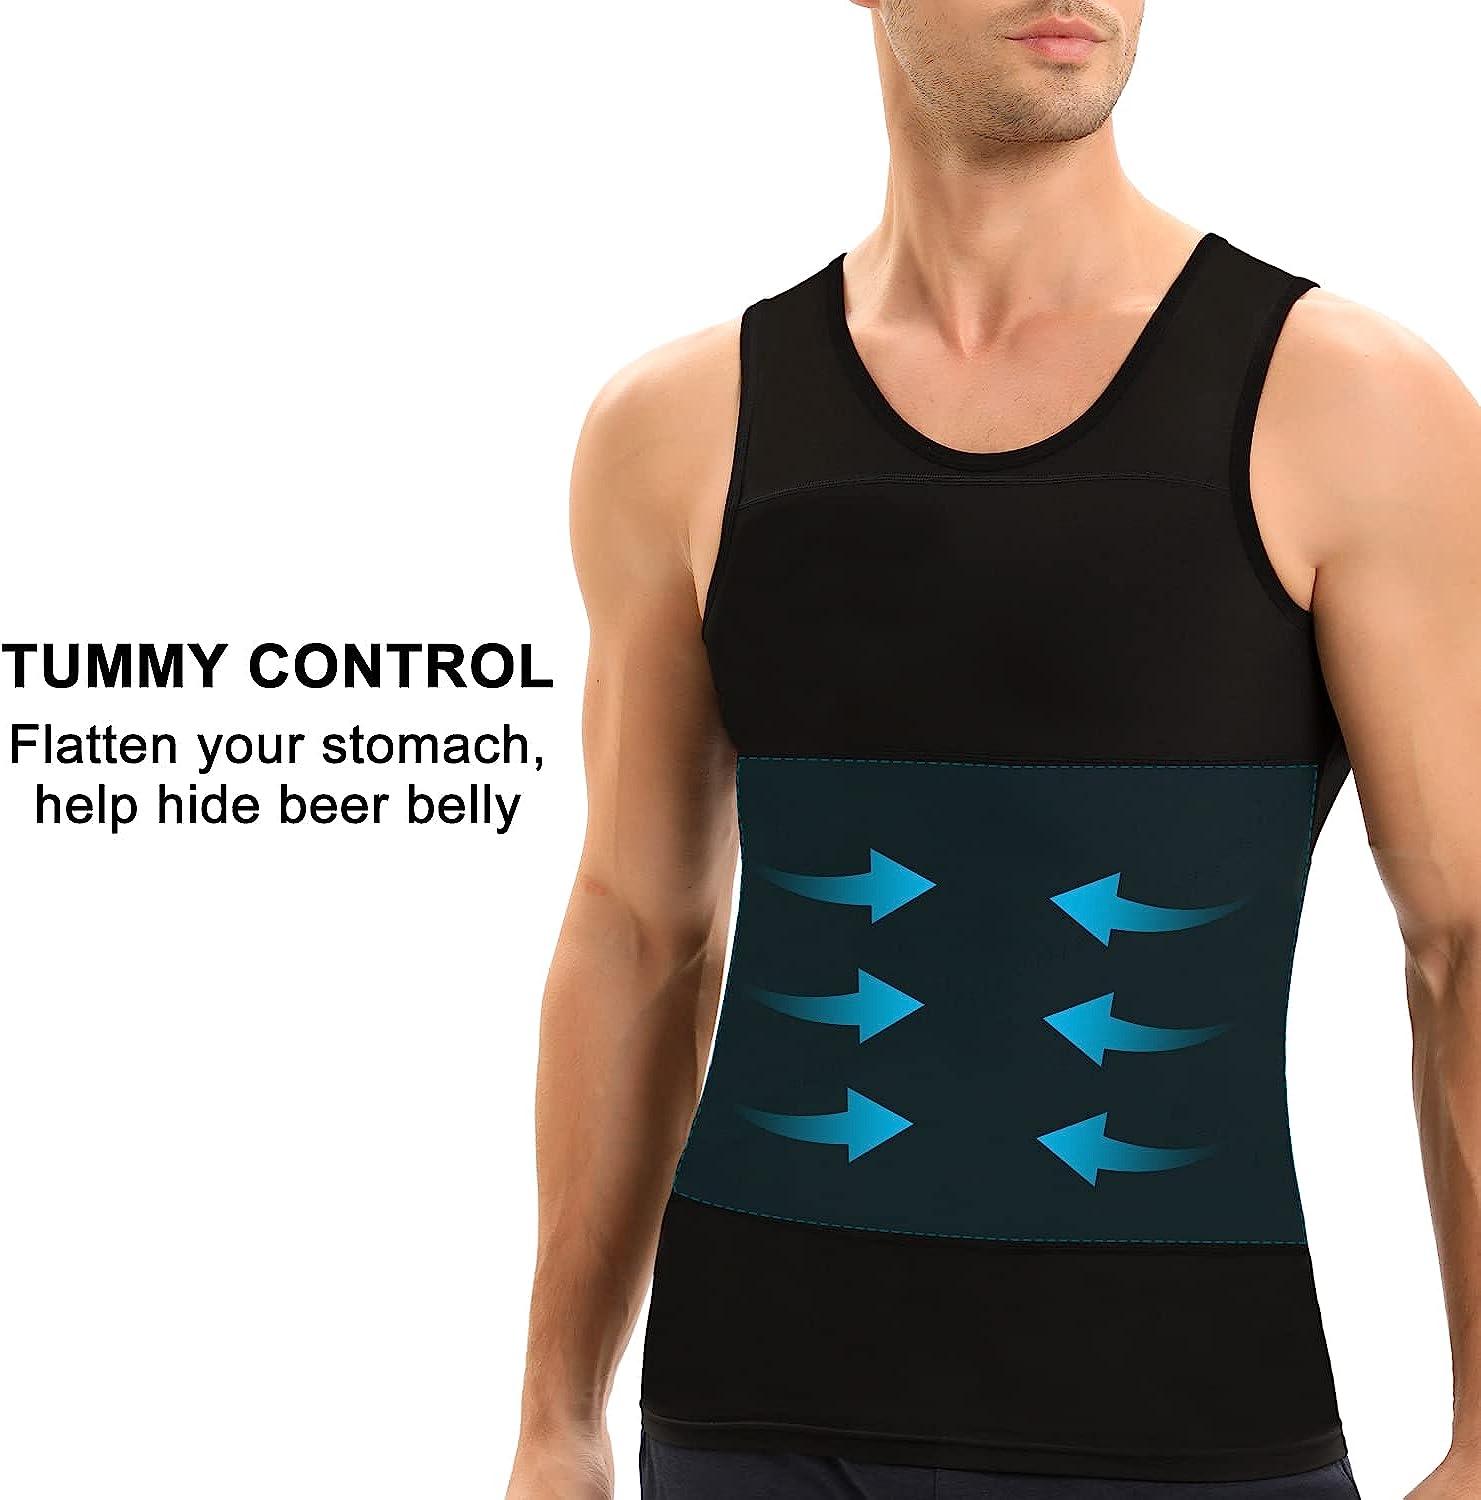 S-6XL Men's Chest Compression Shirt Slim Fit Tummy Control